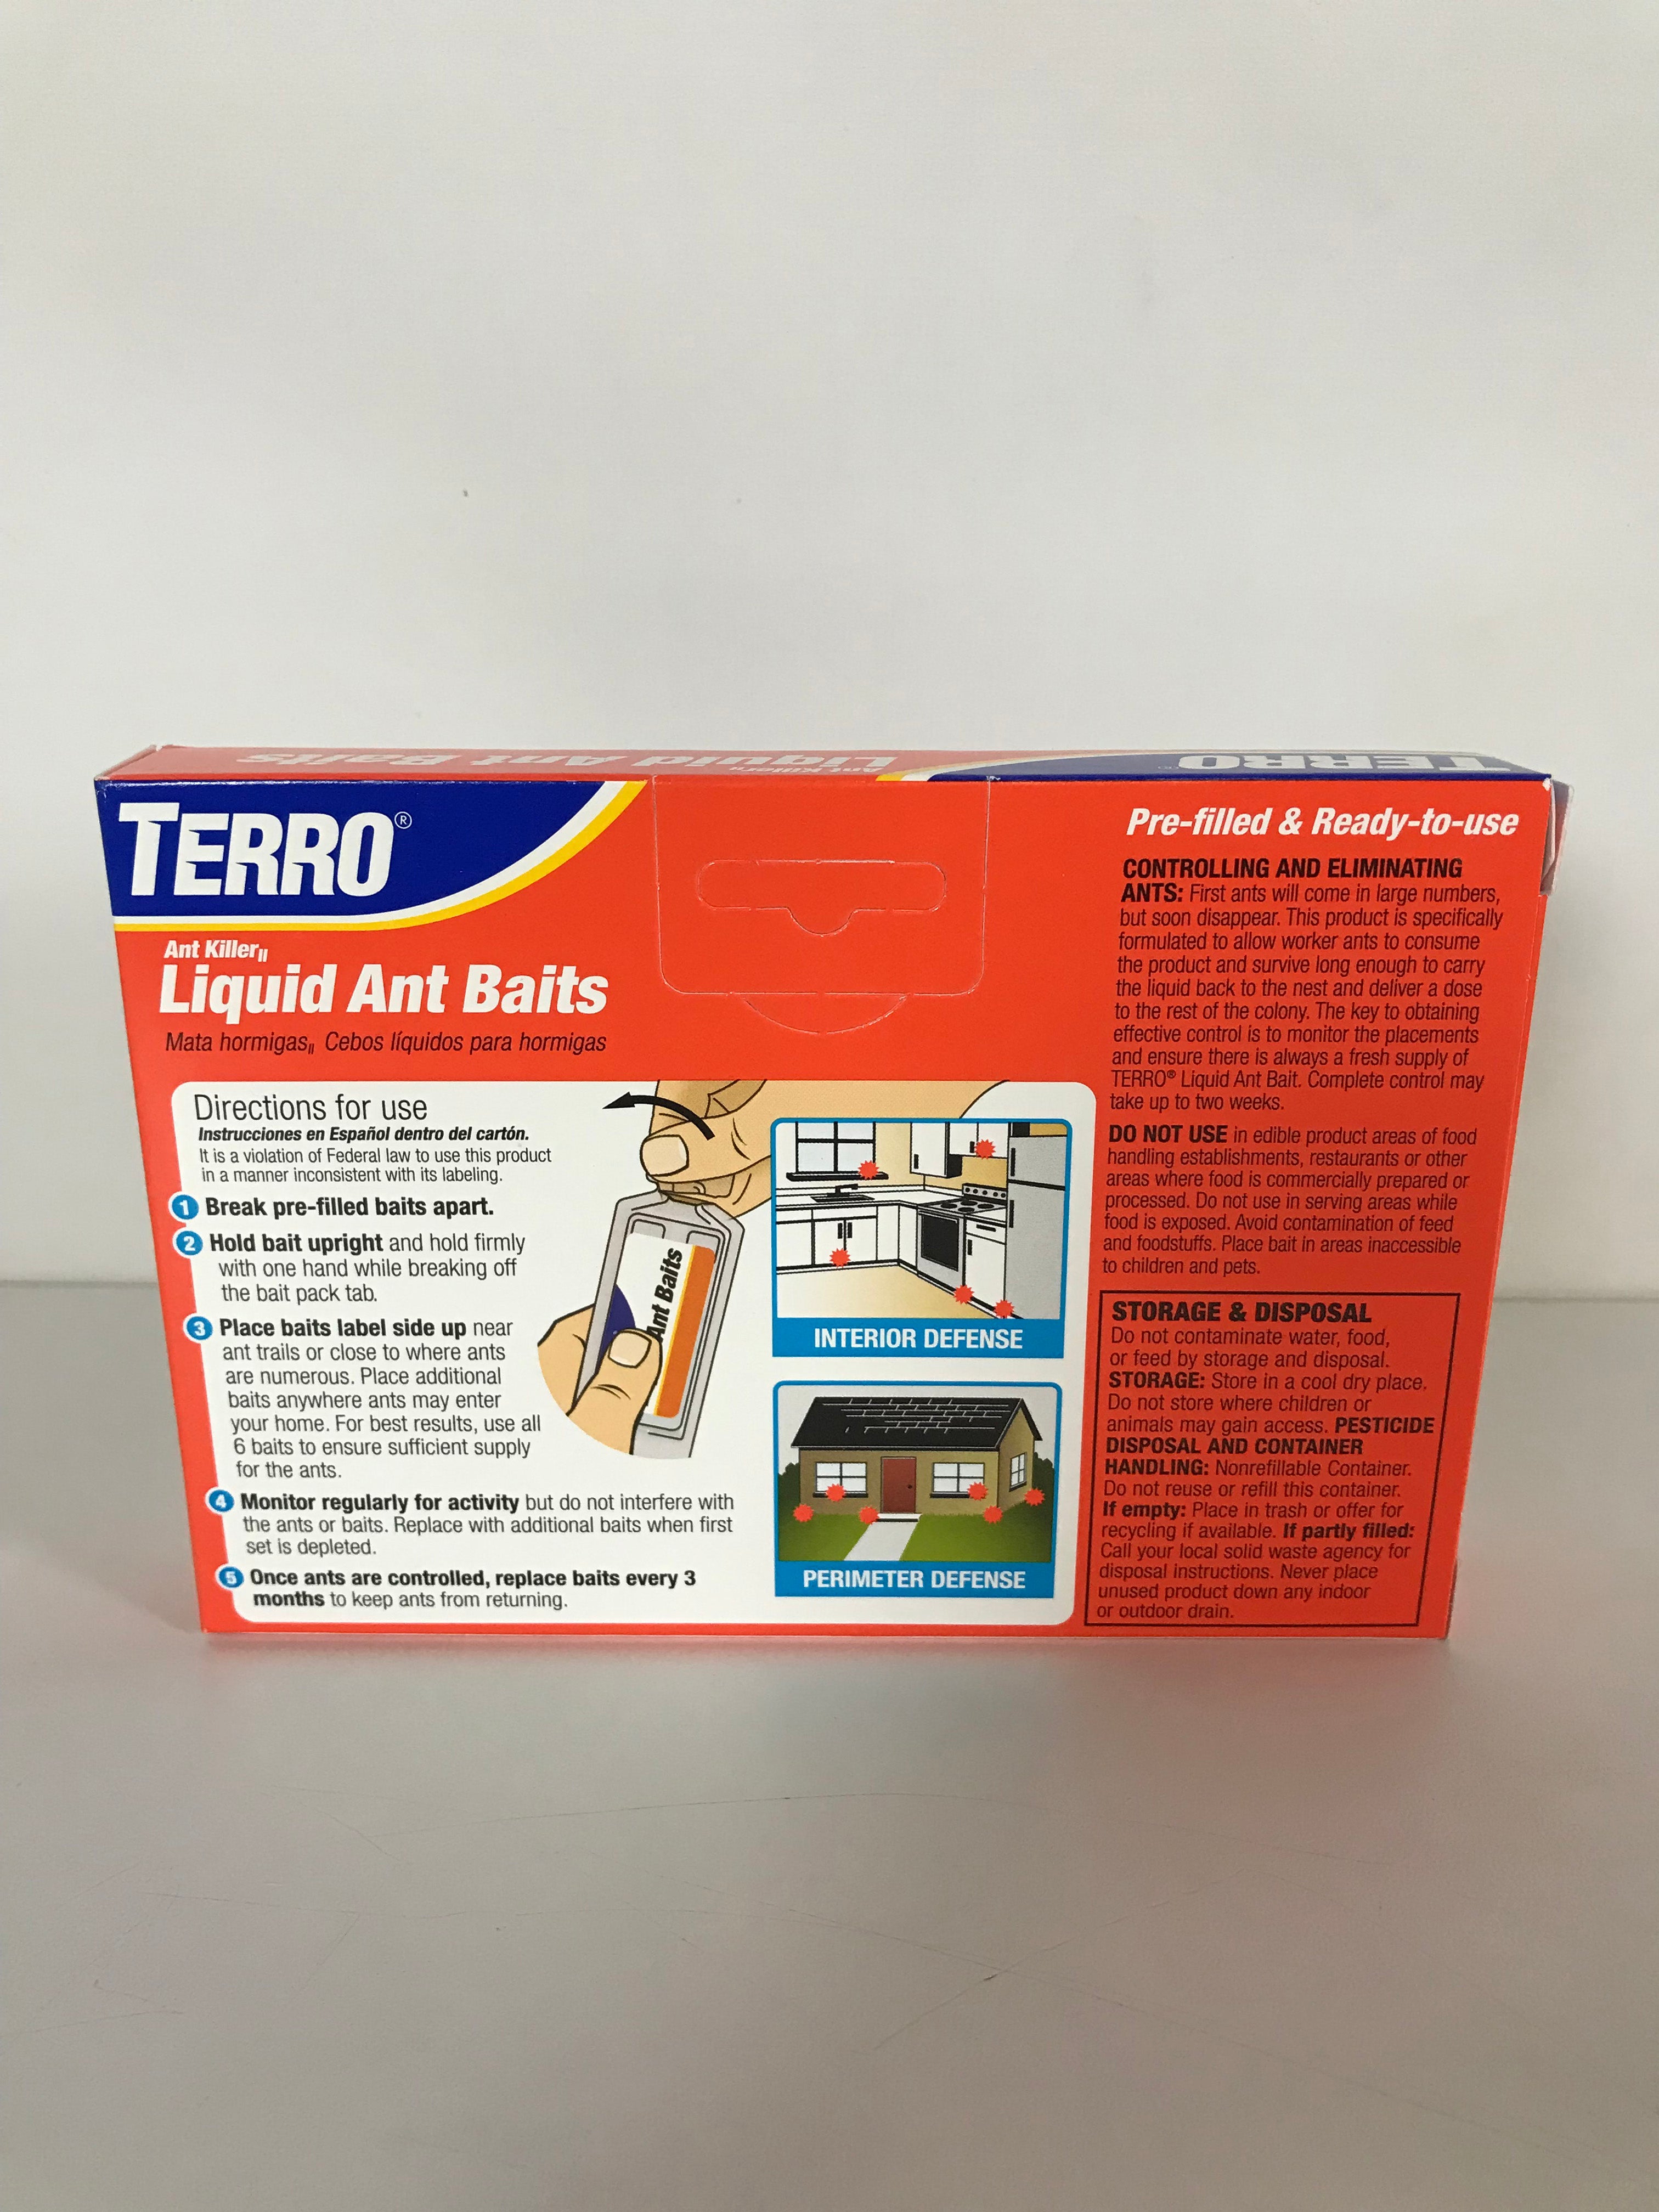 Terro Liquid Ant Pest Control Baits 6 Stations per Box - Pest Control Outlet